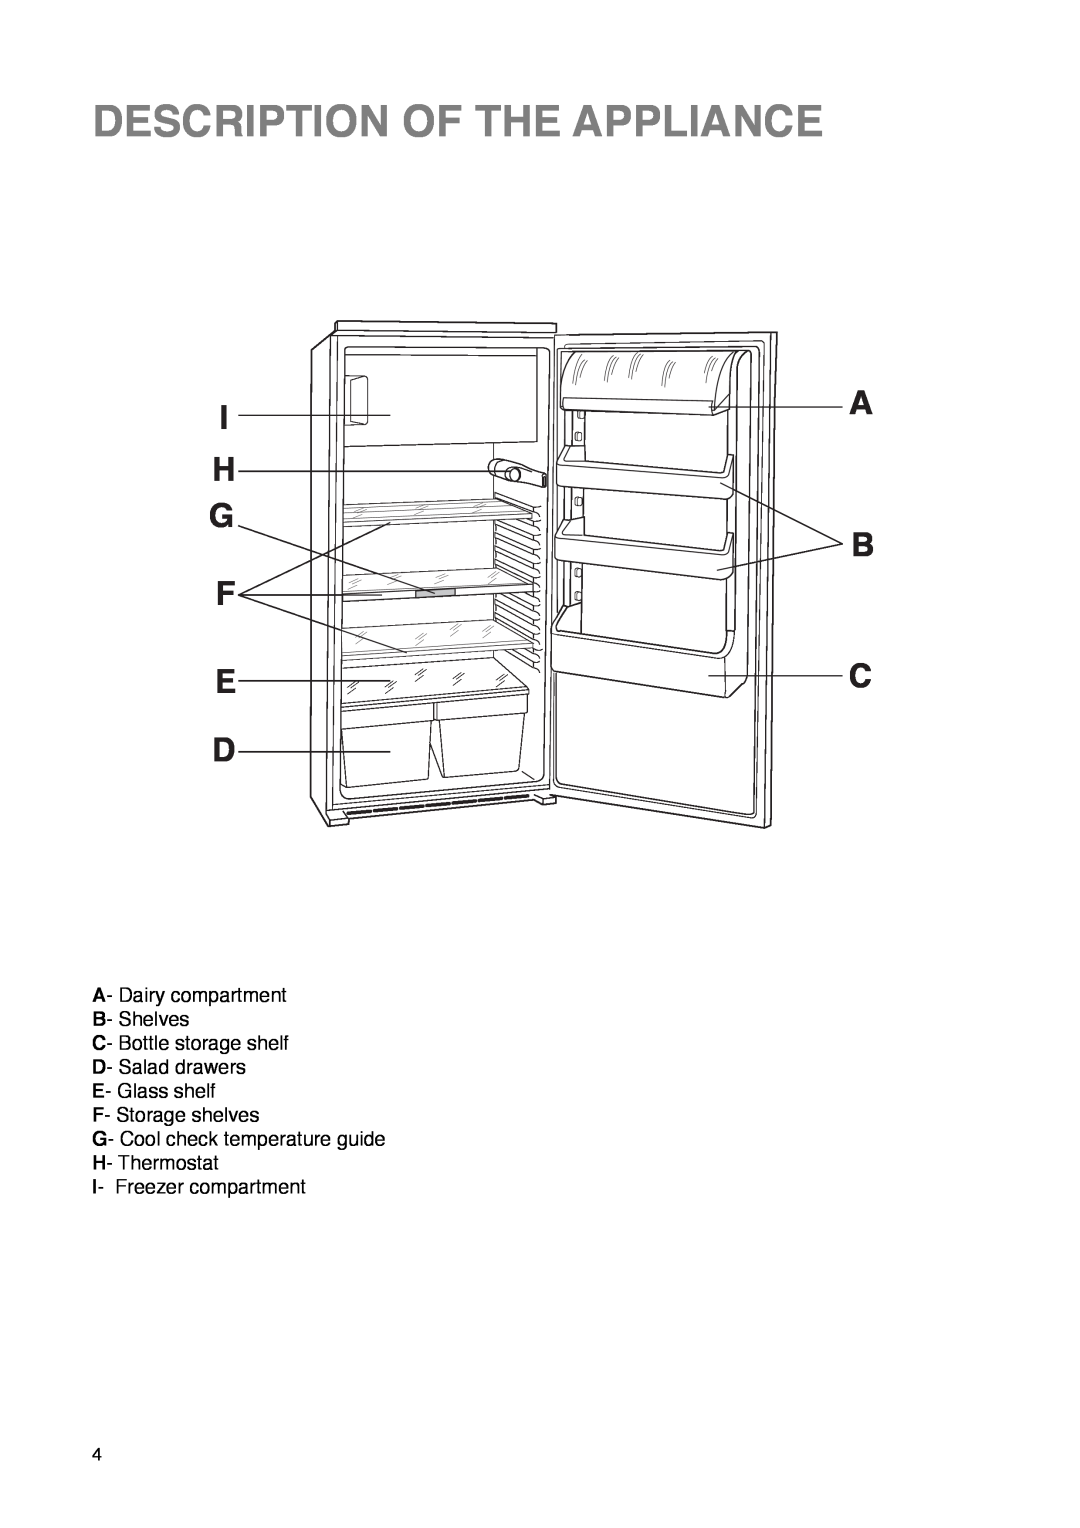 Zanussi ZI 7243 manual Description Of The Appliance, I H G F E D, A B C 